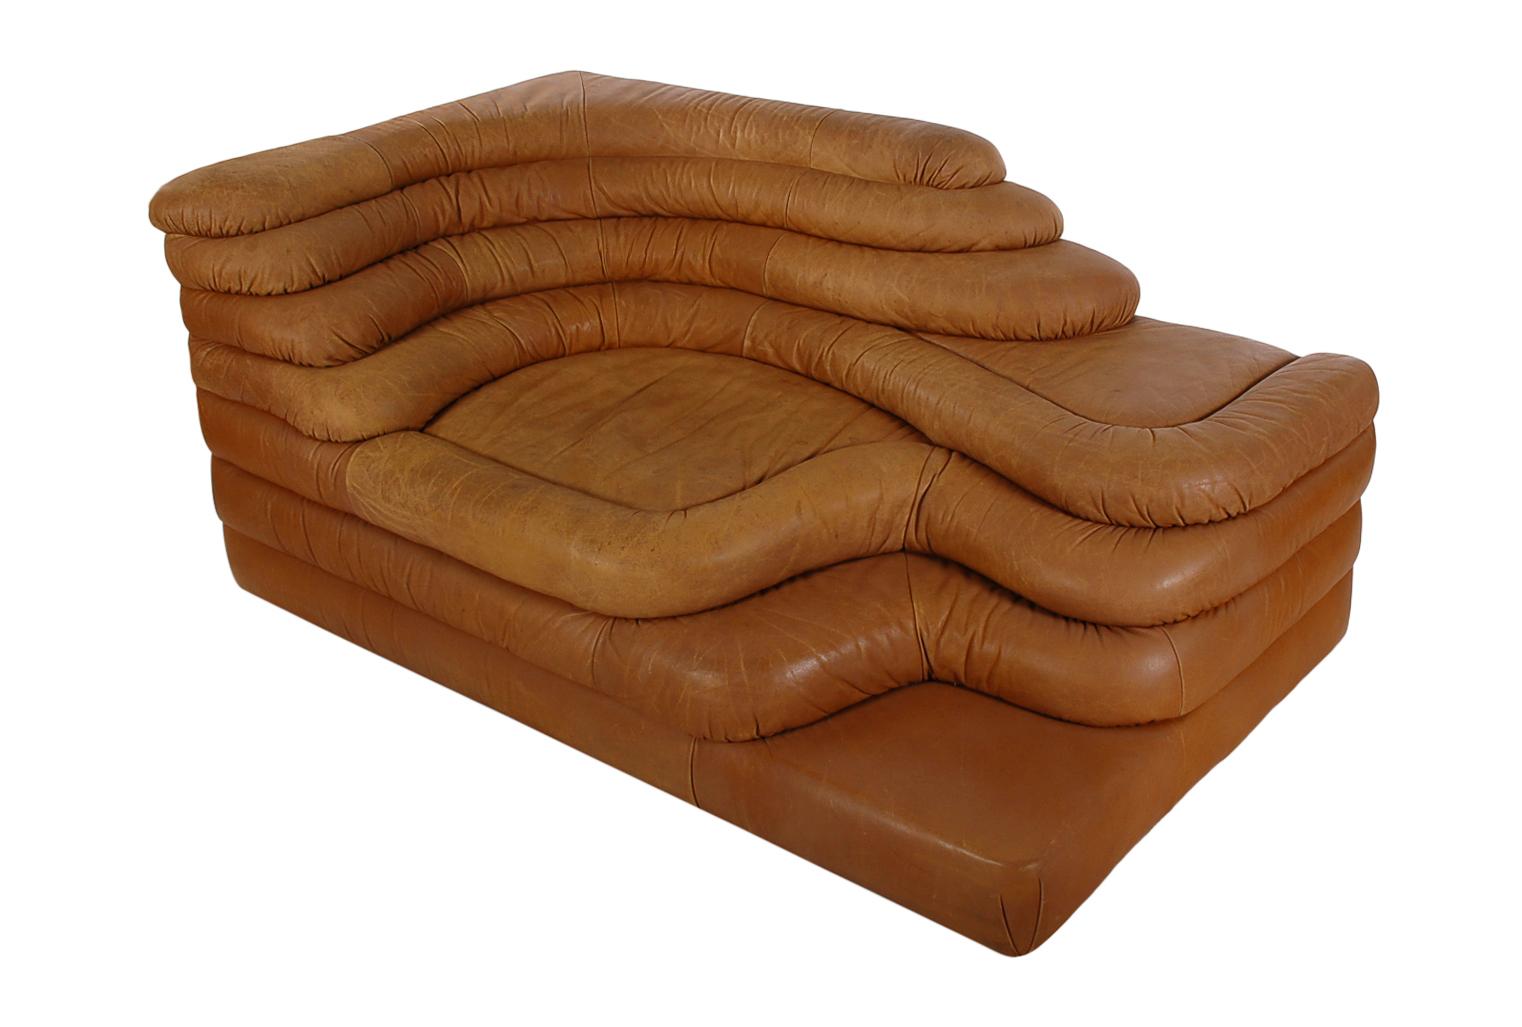 Swiss Mid-Century Modern Leather Chaise/Terazza Sofa by Ubald Klug for De Sede 